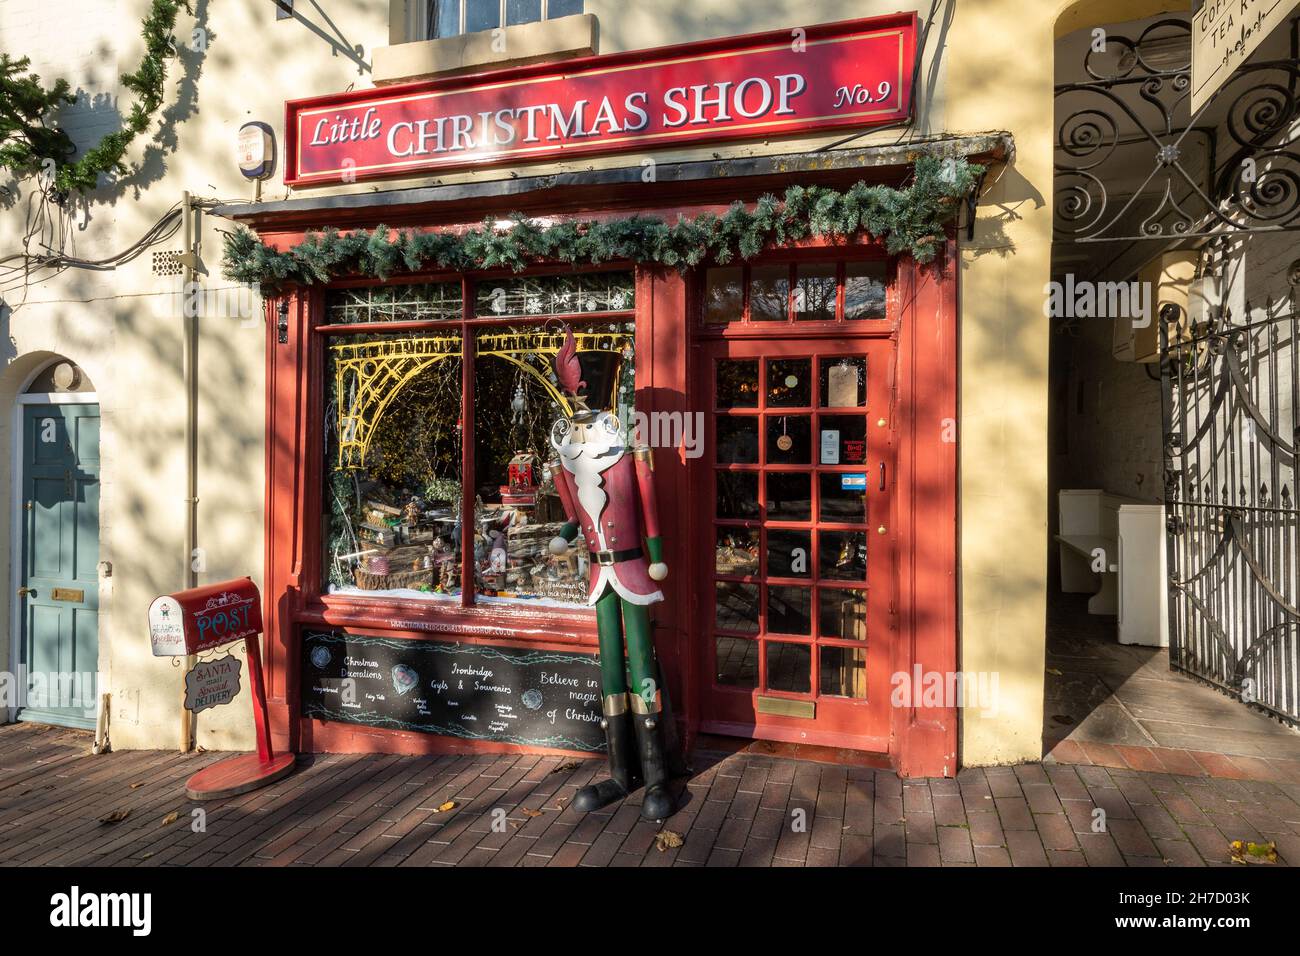 Little Christmas Shop No. 9 in Ironbridge, a Shropshire town, England, UK Stock Photo